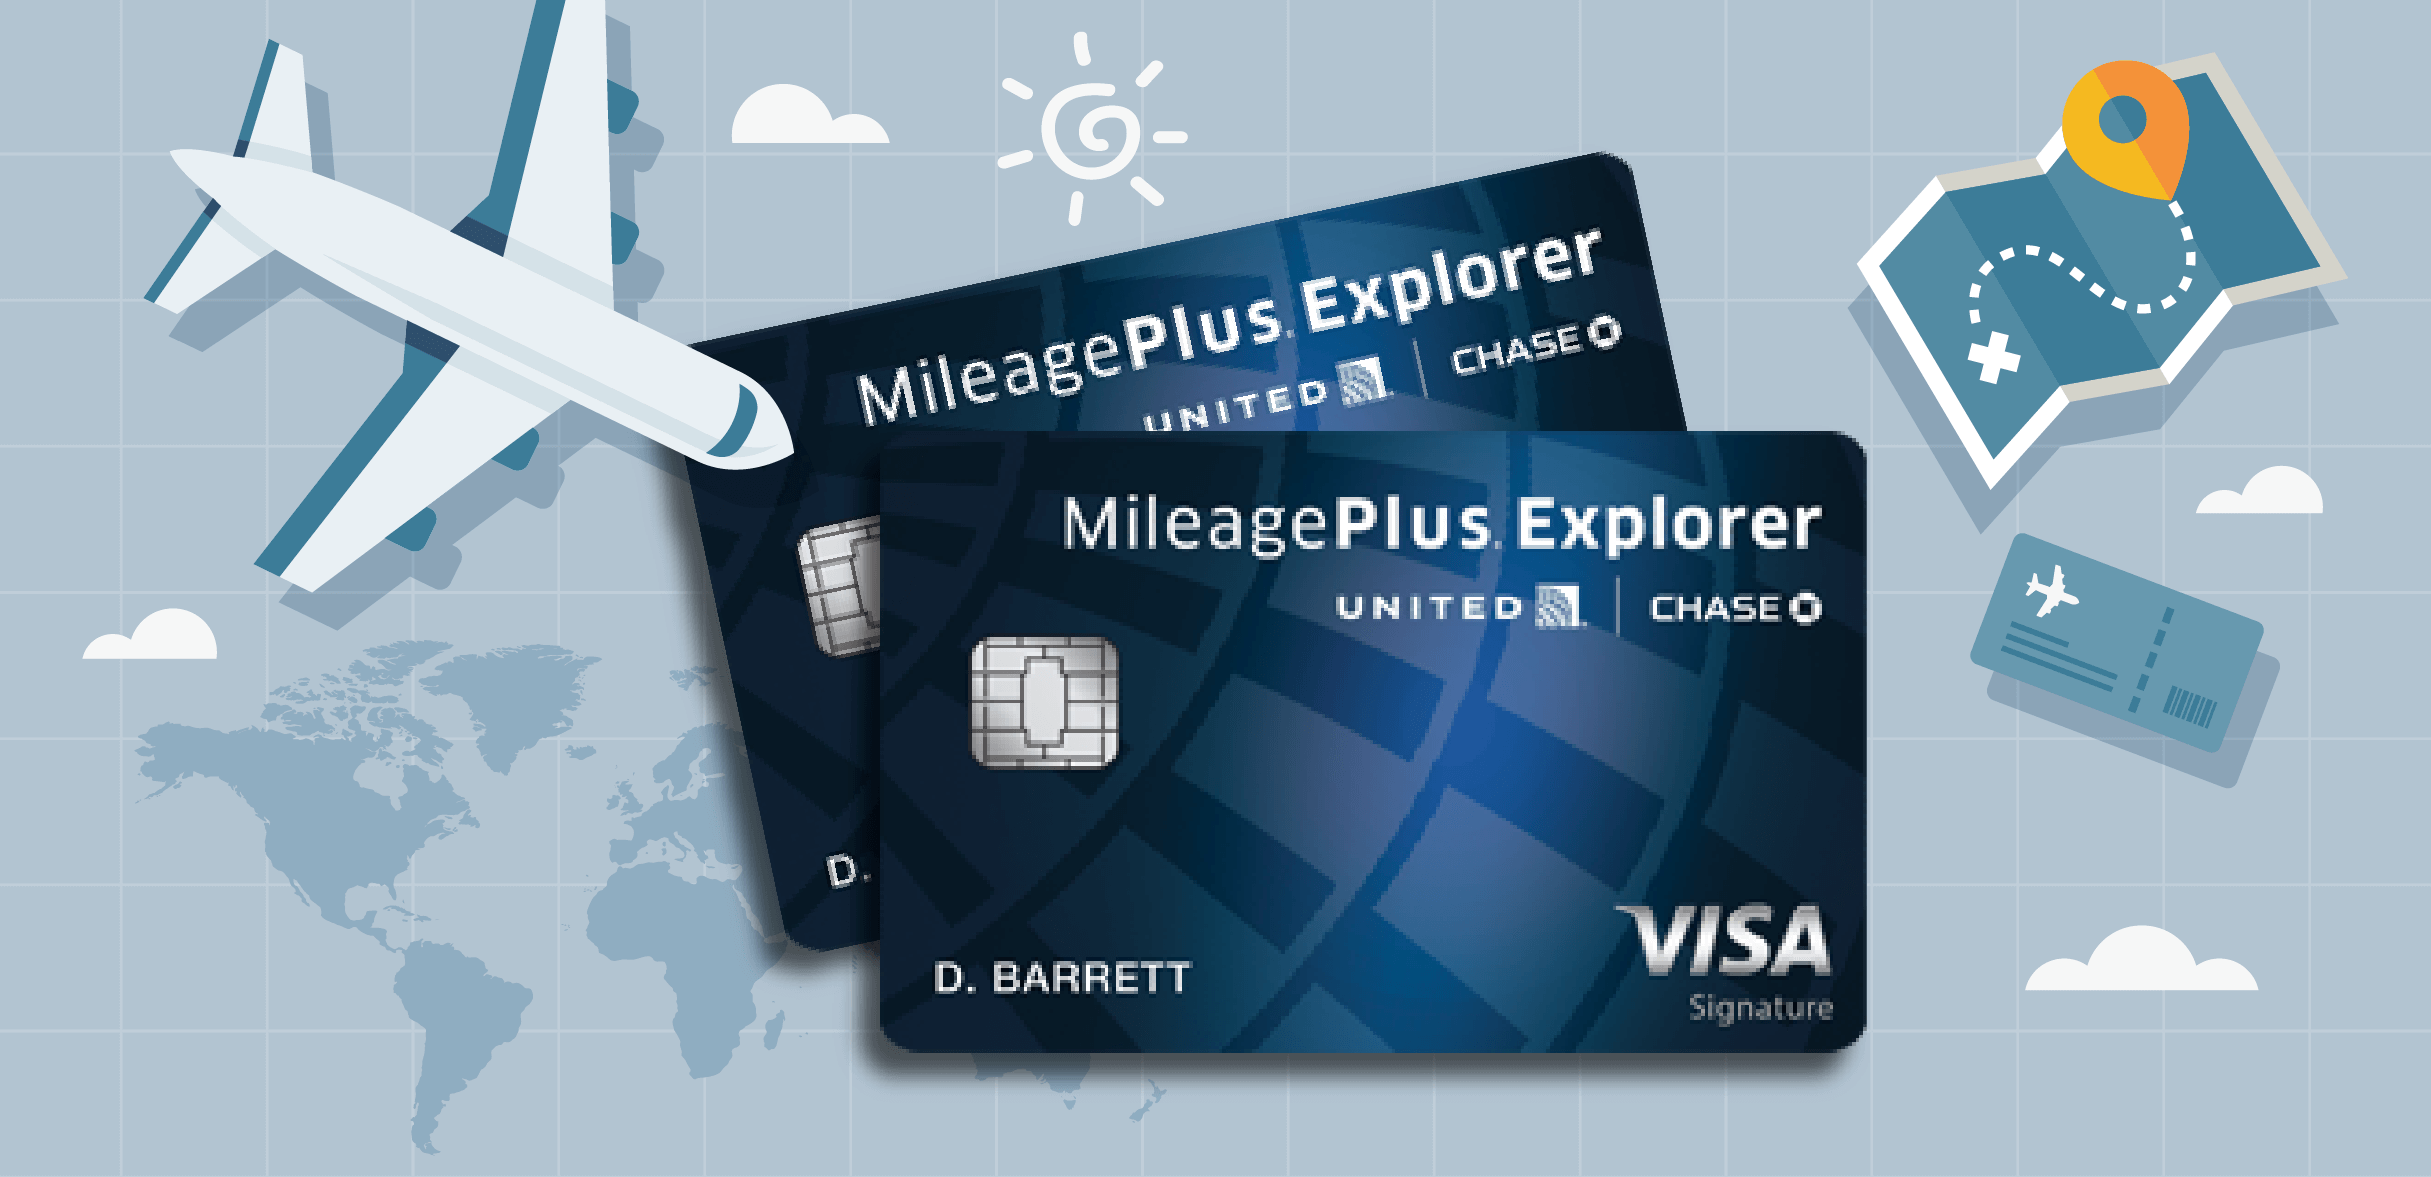 mileageplus explorer travel insurance